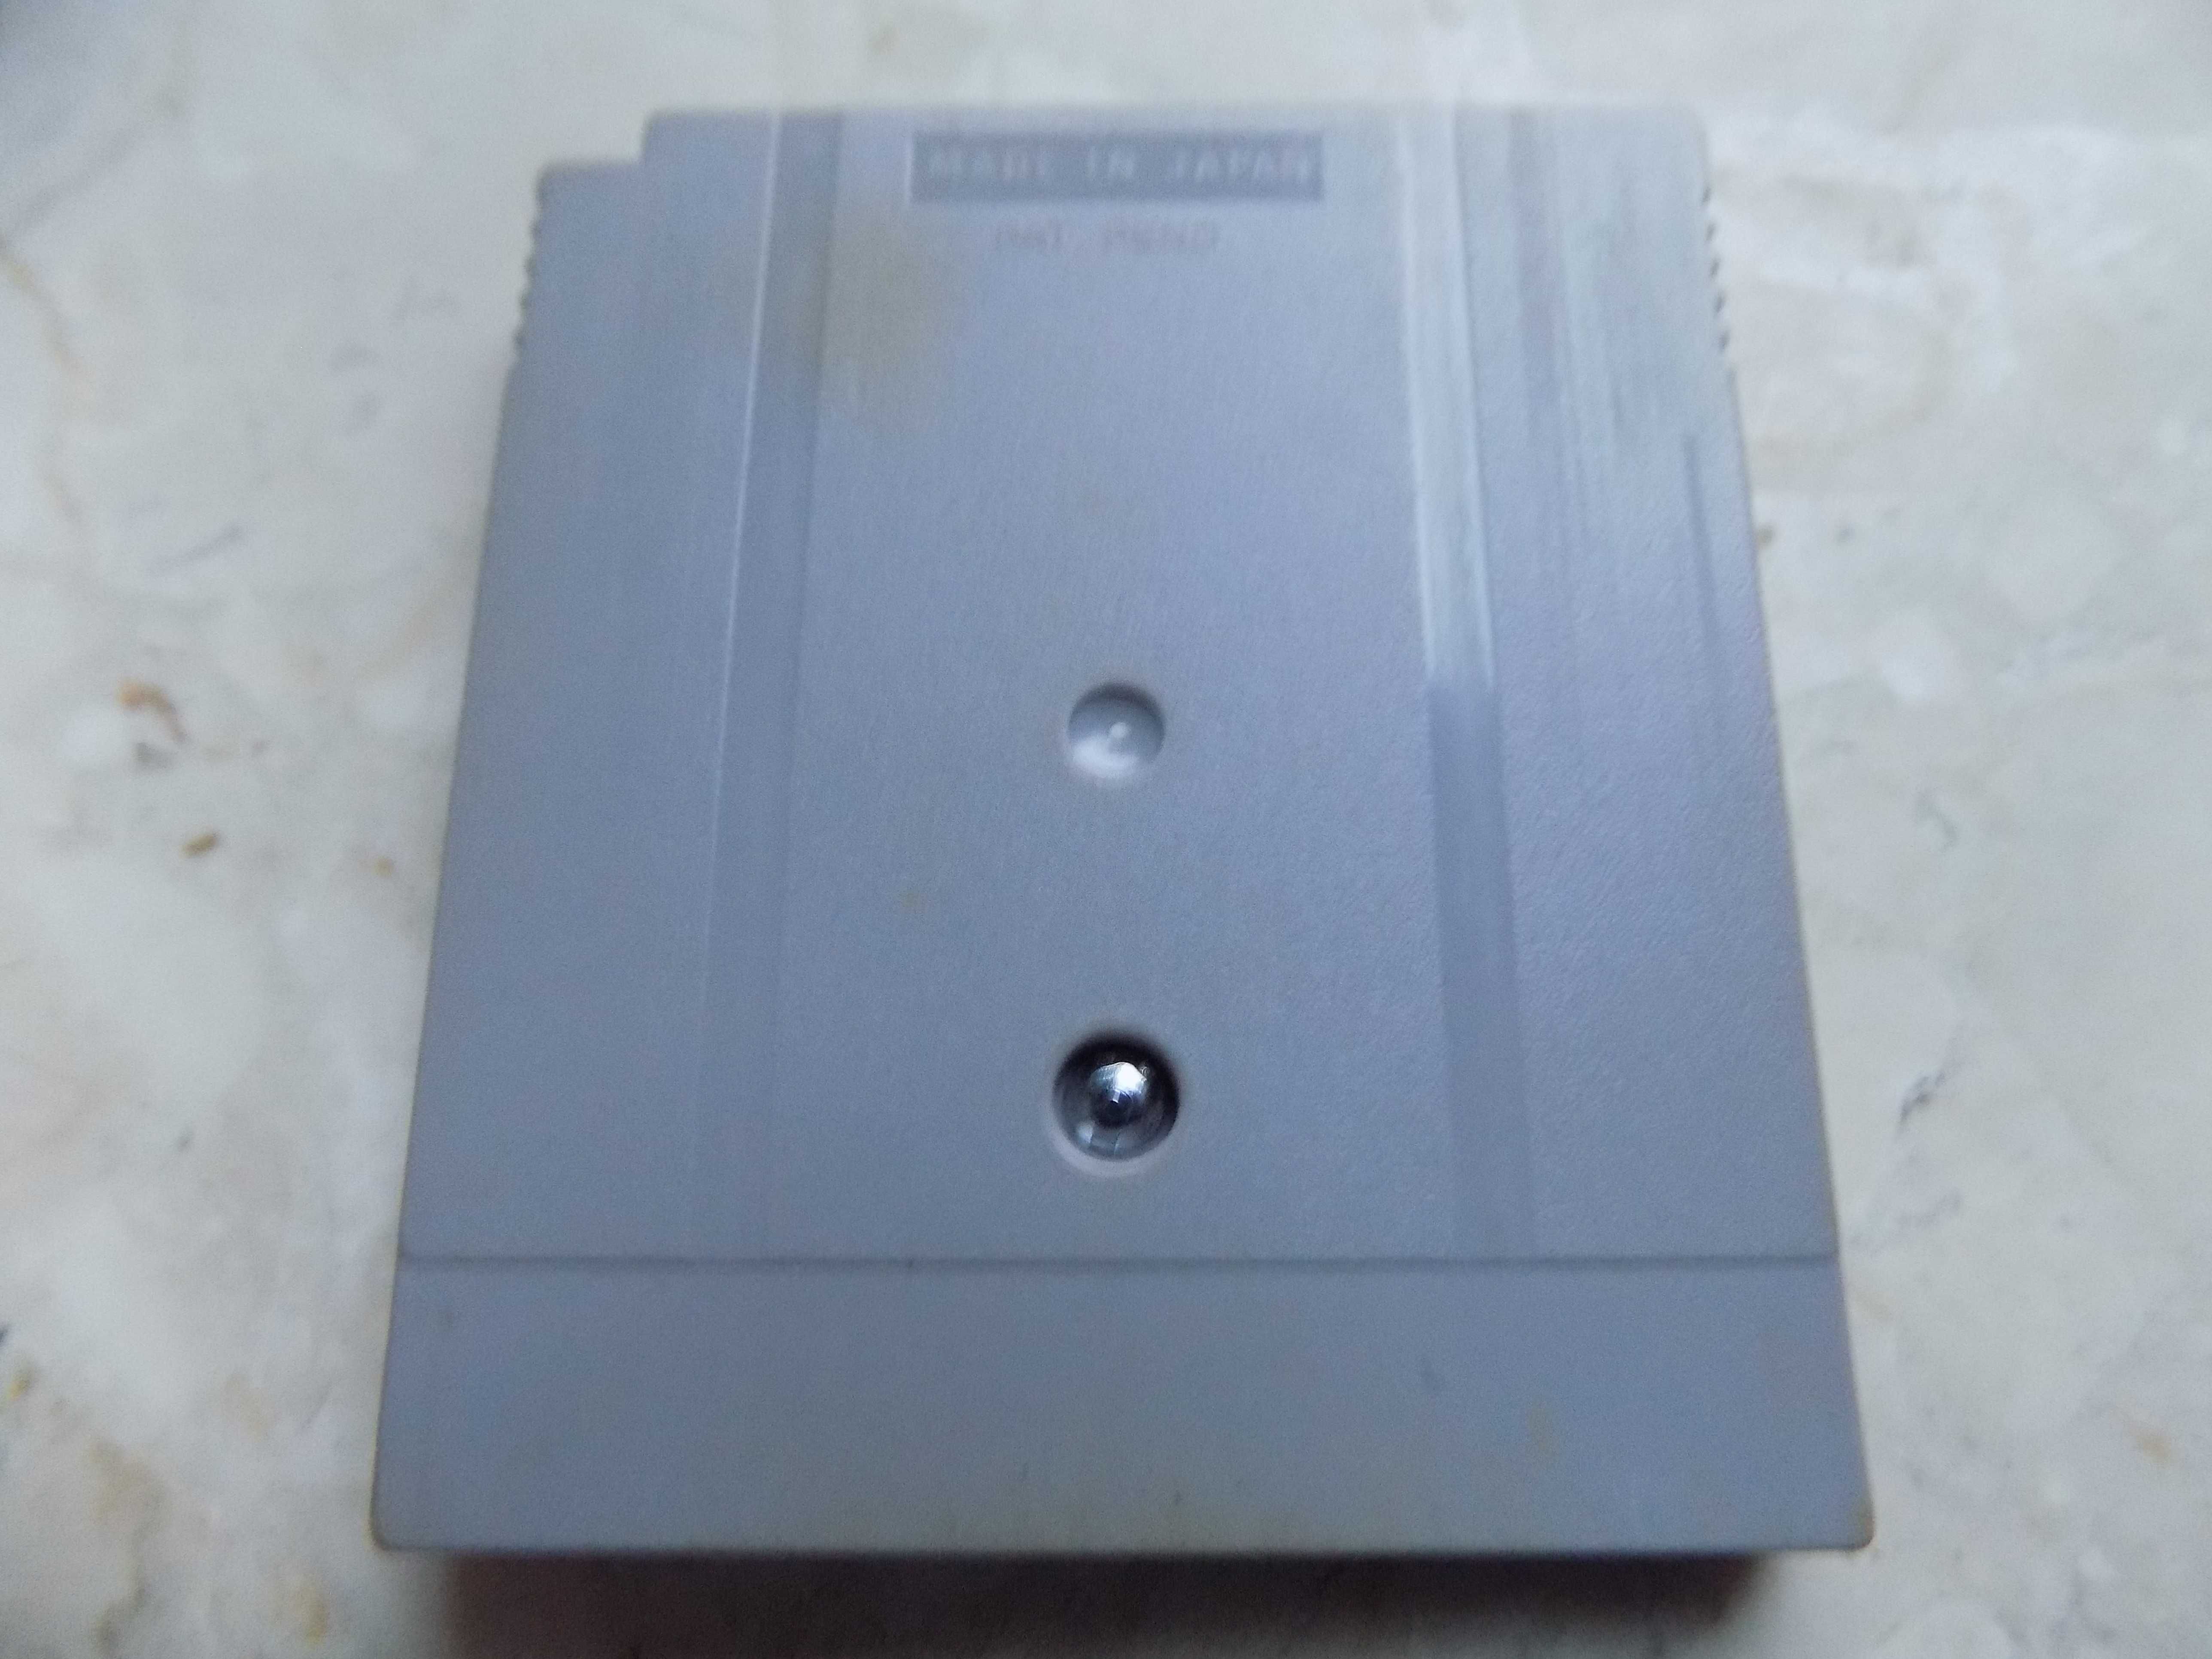 Boulder Dash -gra na Nintendo Game Boy, GBA GameBoy Advance i GBC, SGB